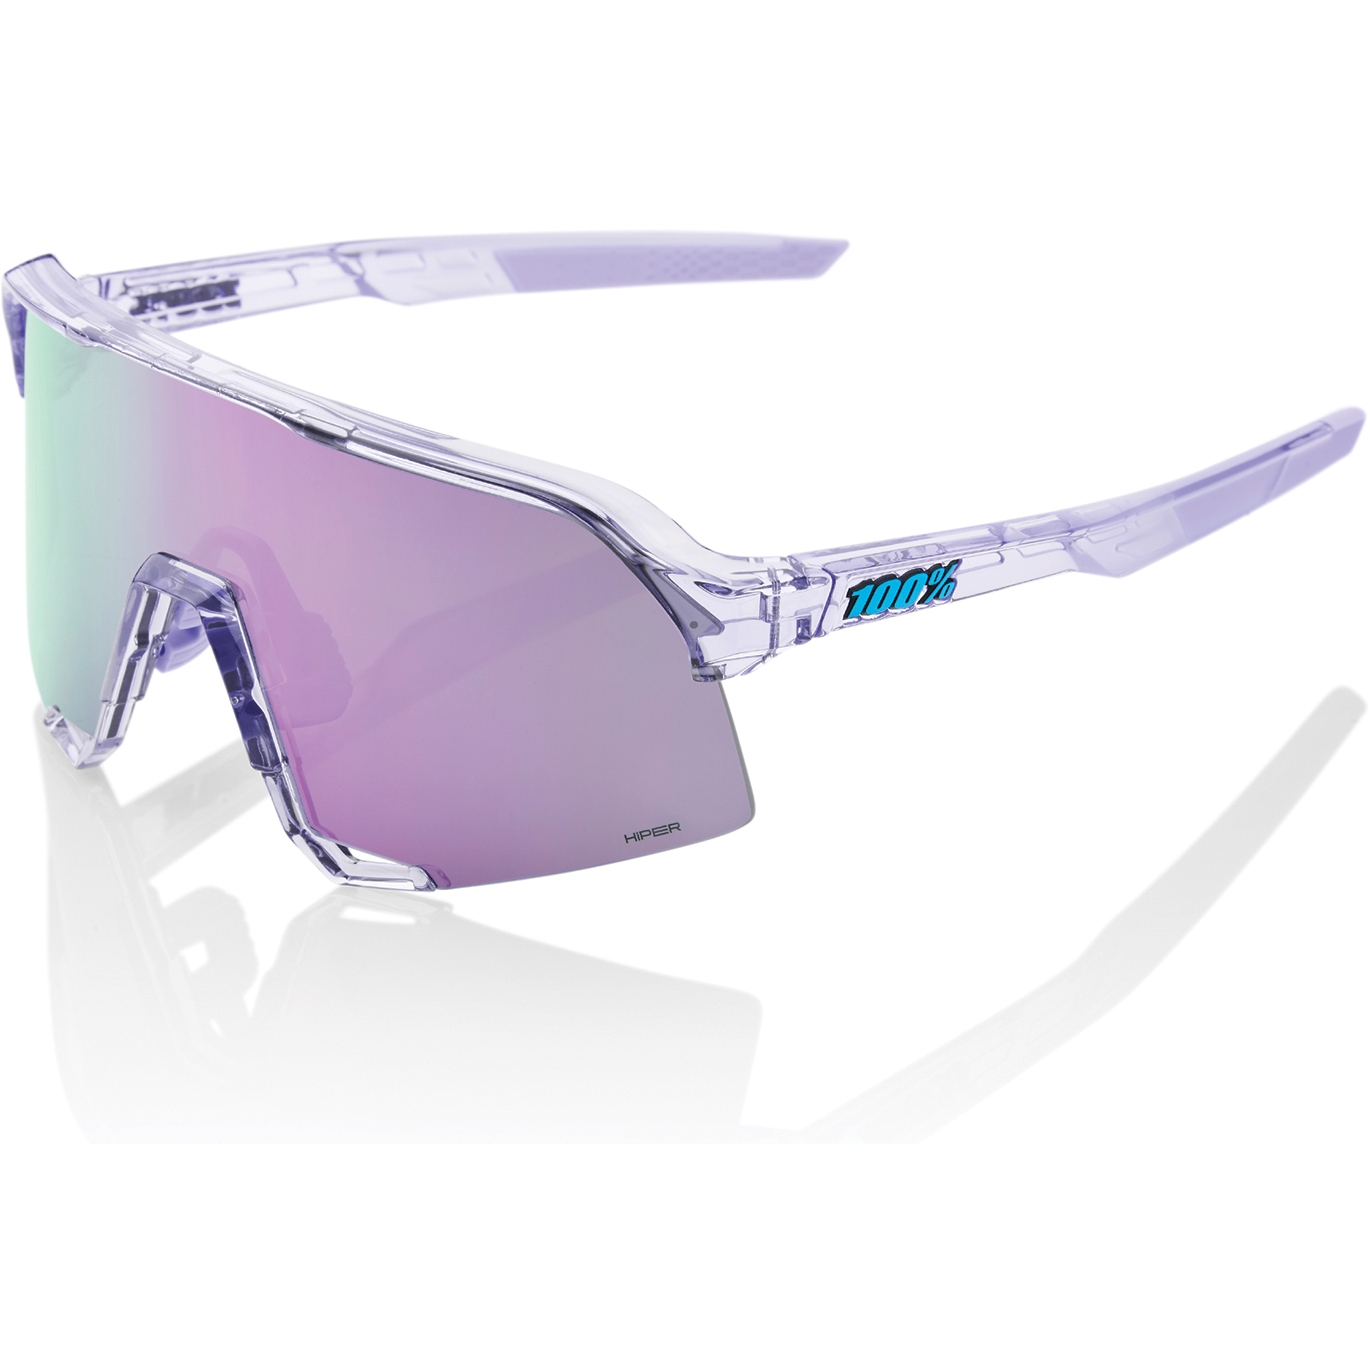 Picture of 100% S3 Glasses - HiPER Mirror Lens - Polished Translucent Lavender / Lavender + Clear